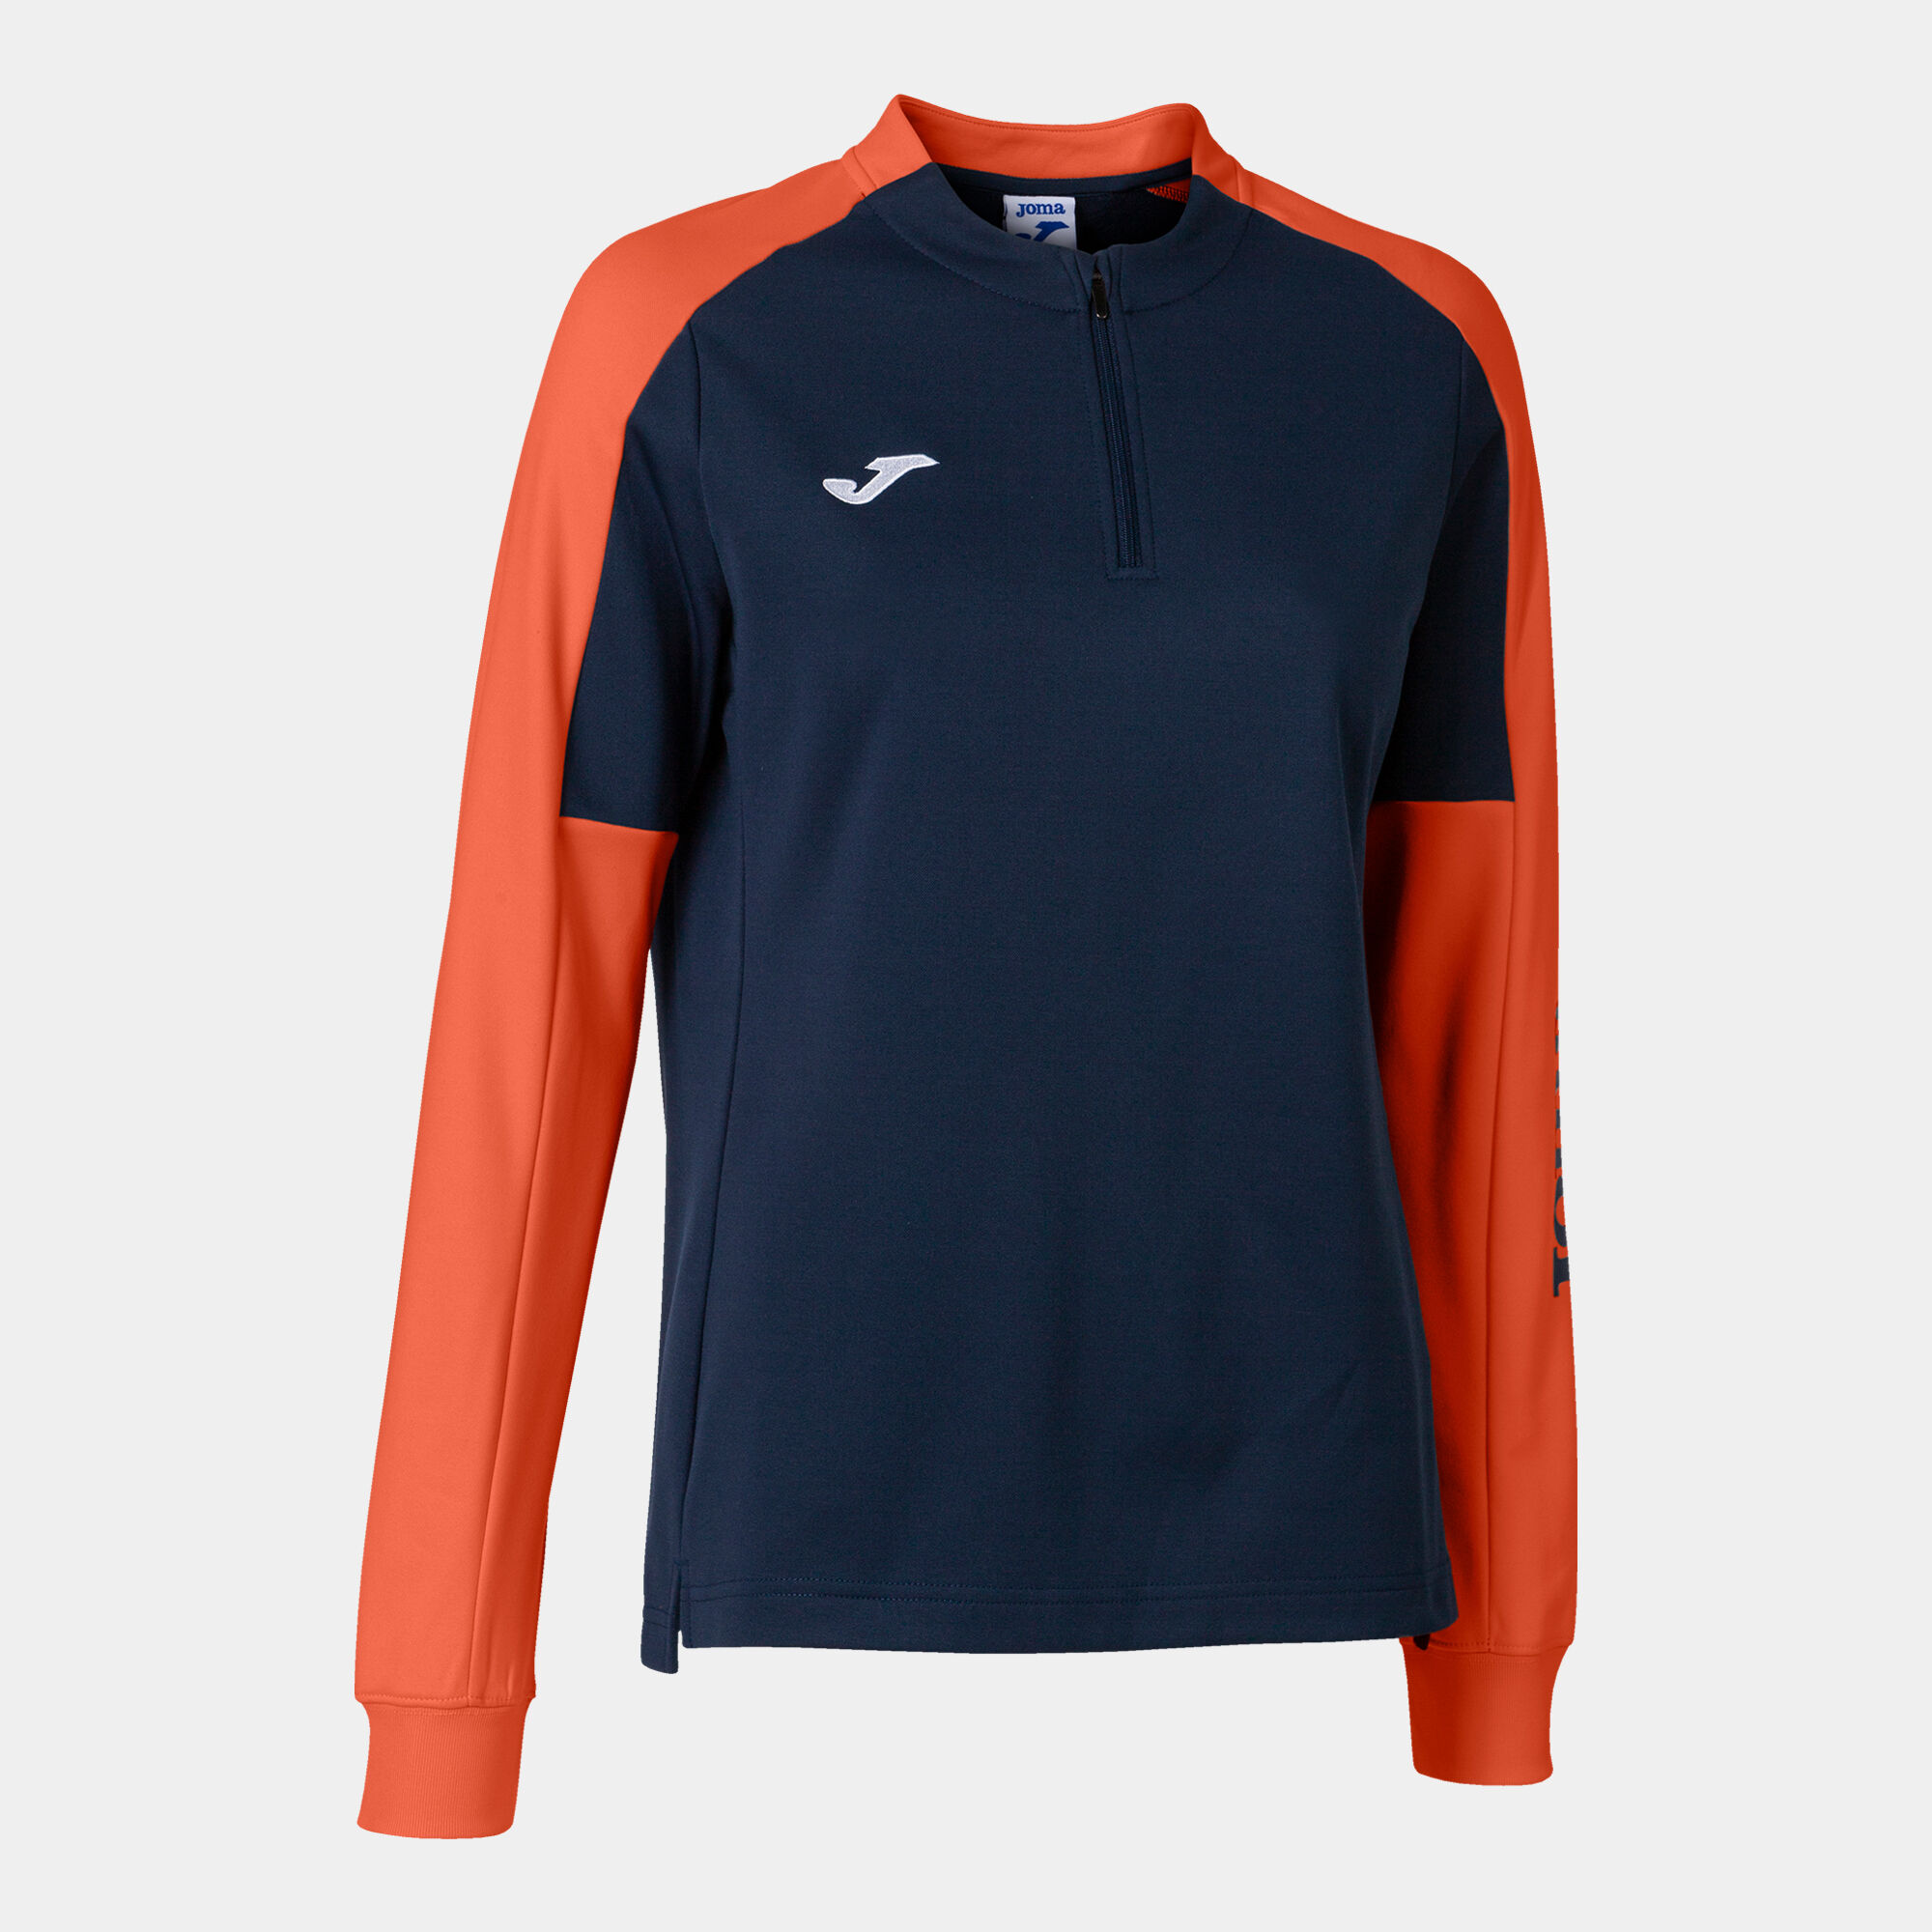 Sweat-shirt femme Eco Championship bleu marine orange fluo